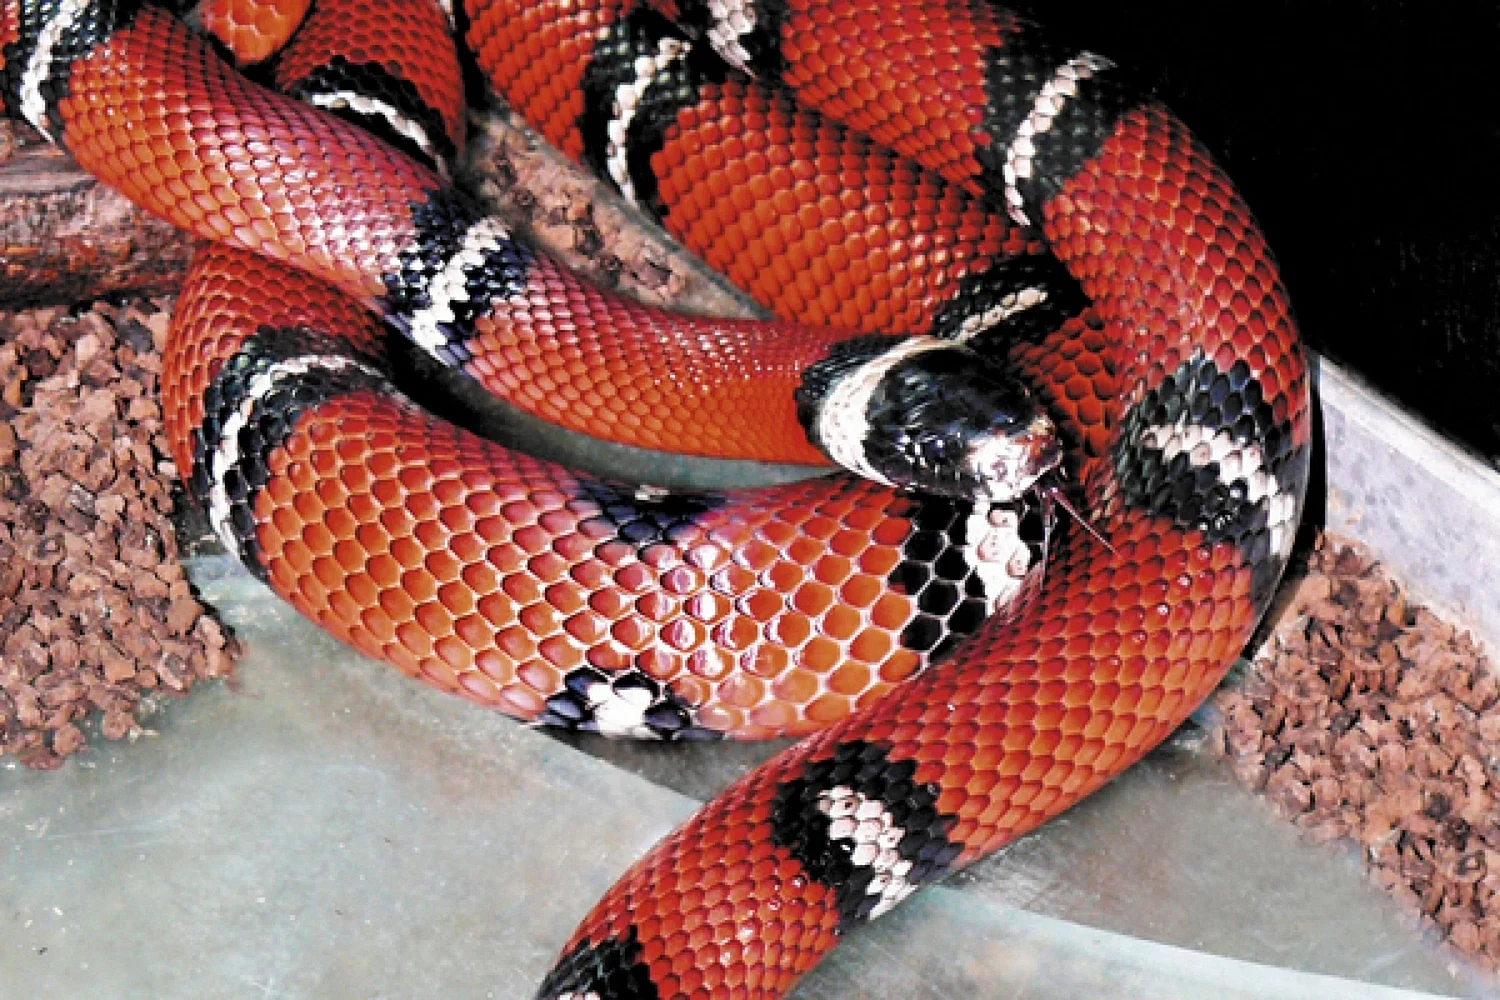 Синалойская молочная змея